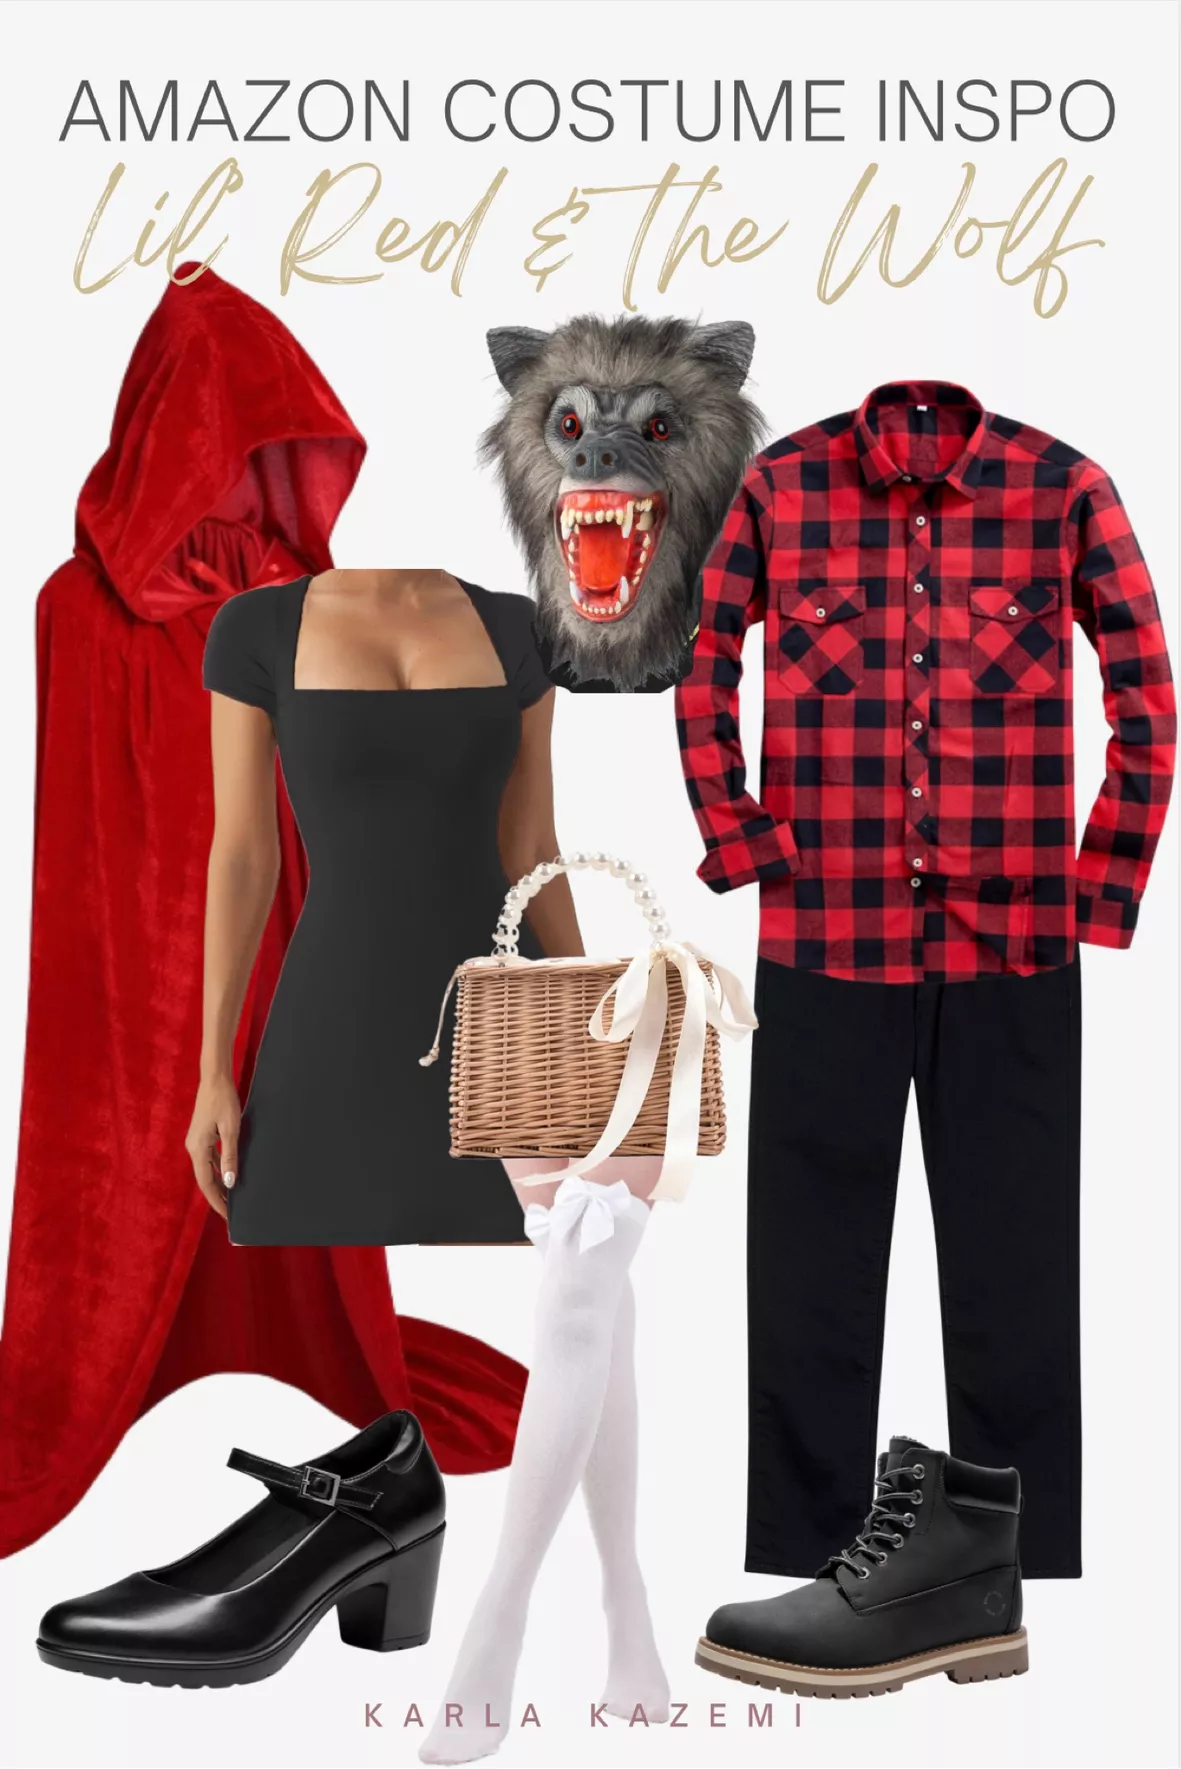 red riding hood werewolf costume